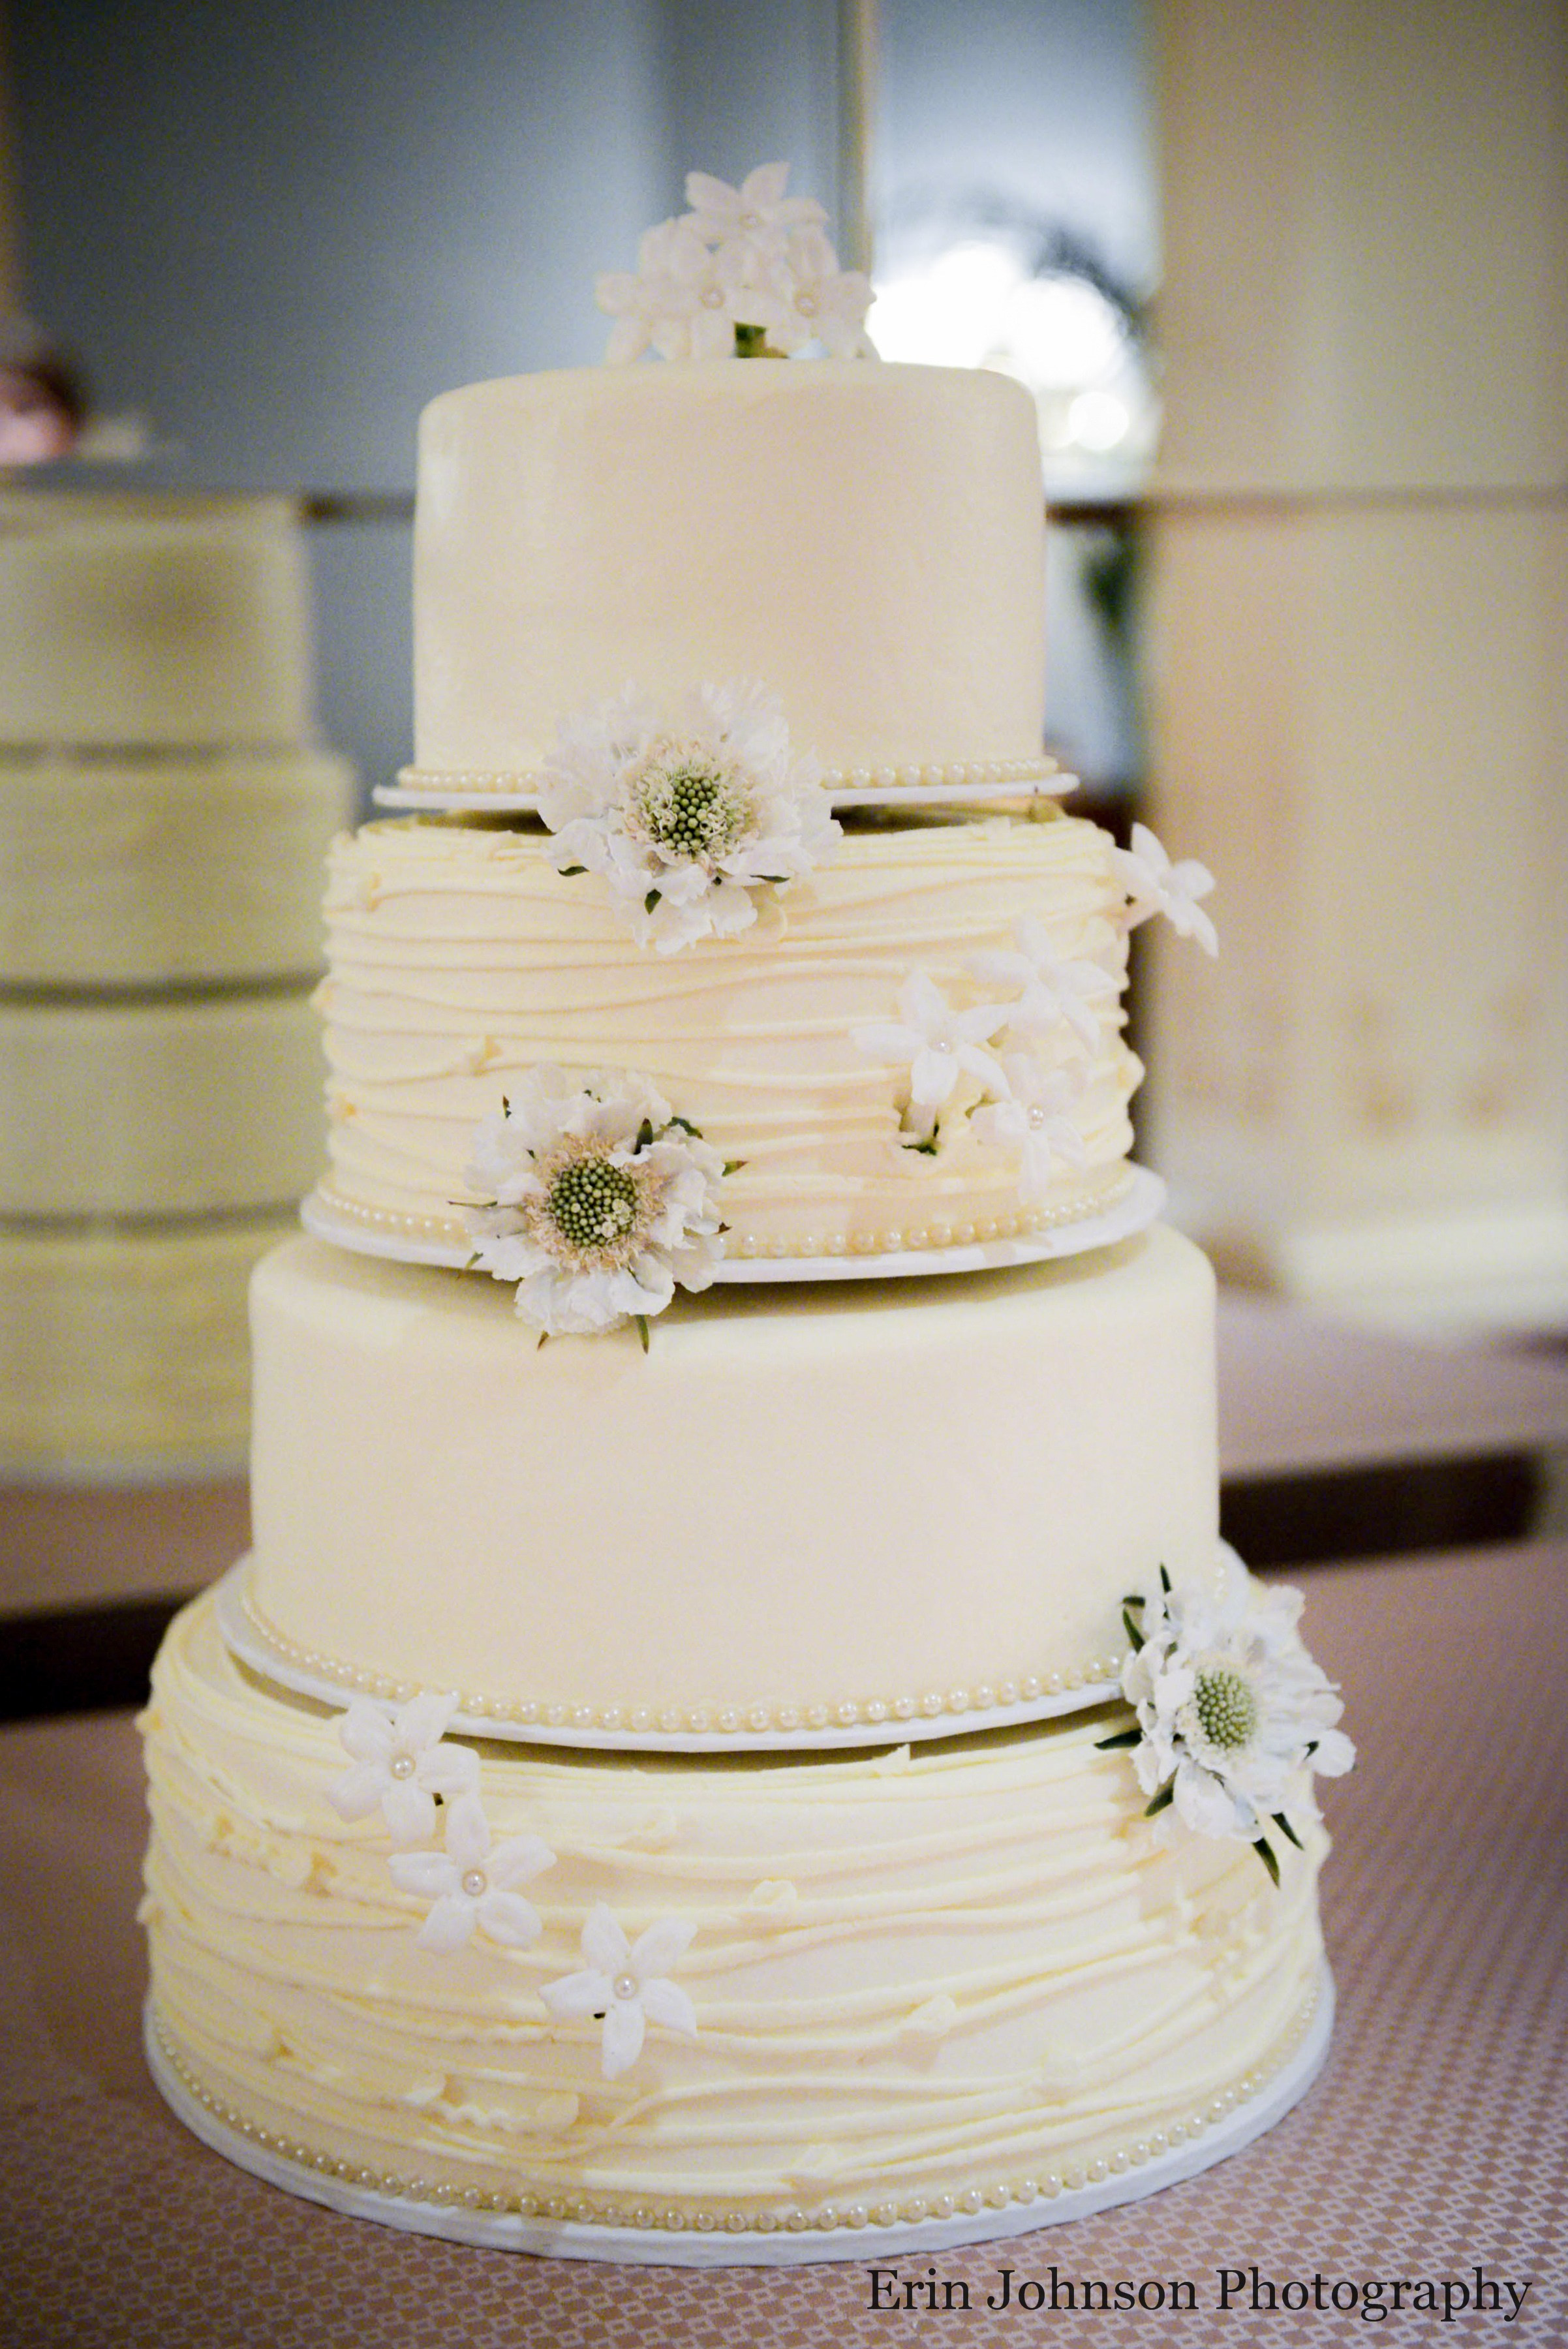 Wedding Cup Cakes Designs
 Wedding Cake Designs